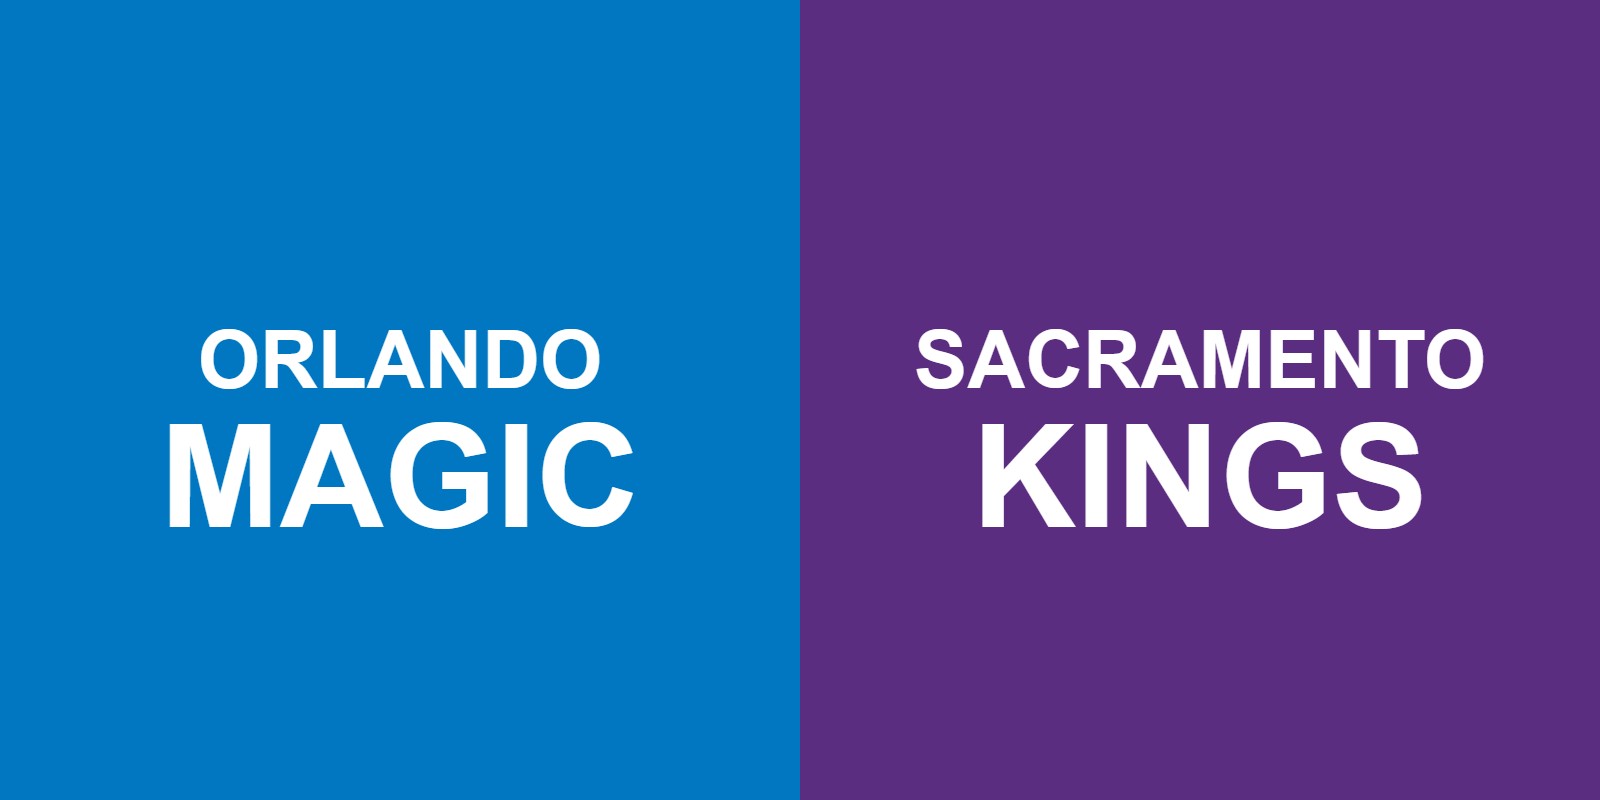 Magic vs Kings